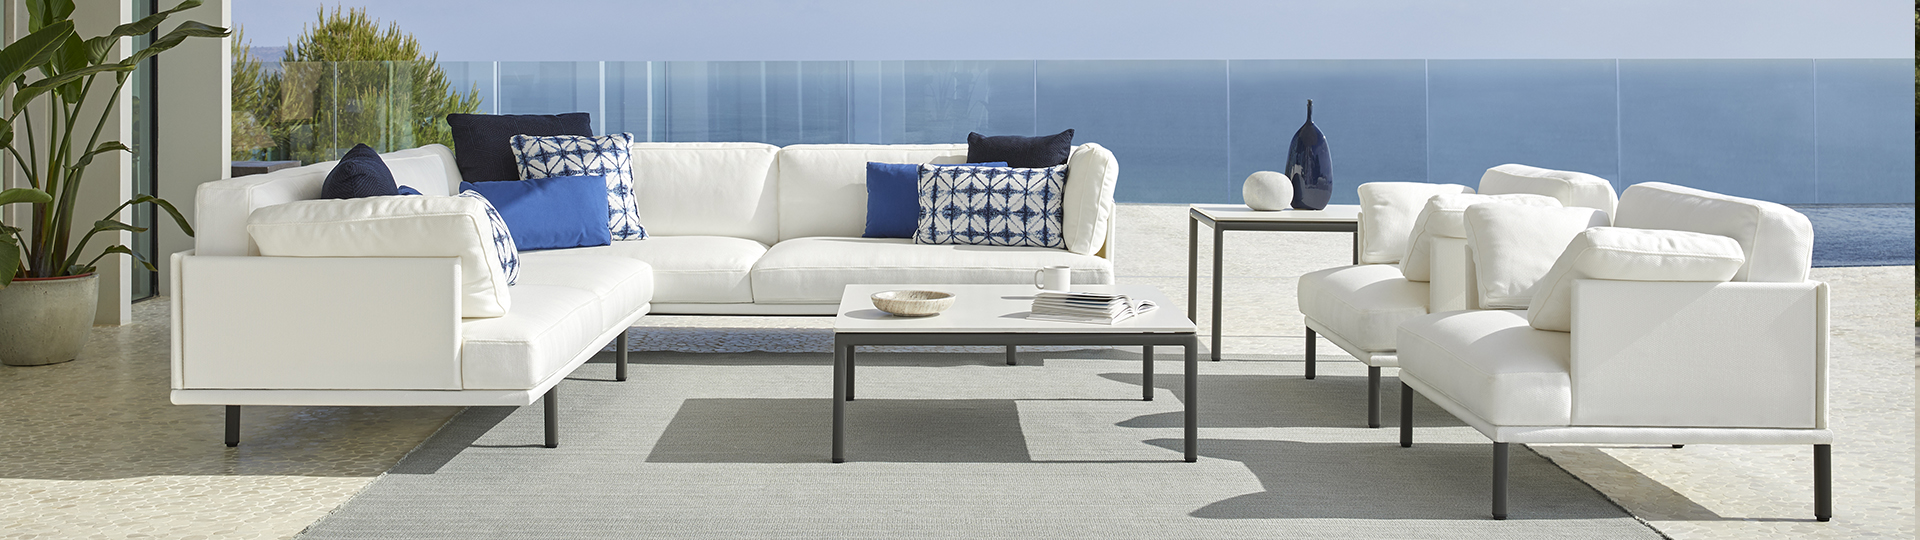 POINT Outdoor Sofas | Furniture Designer |